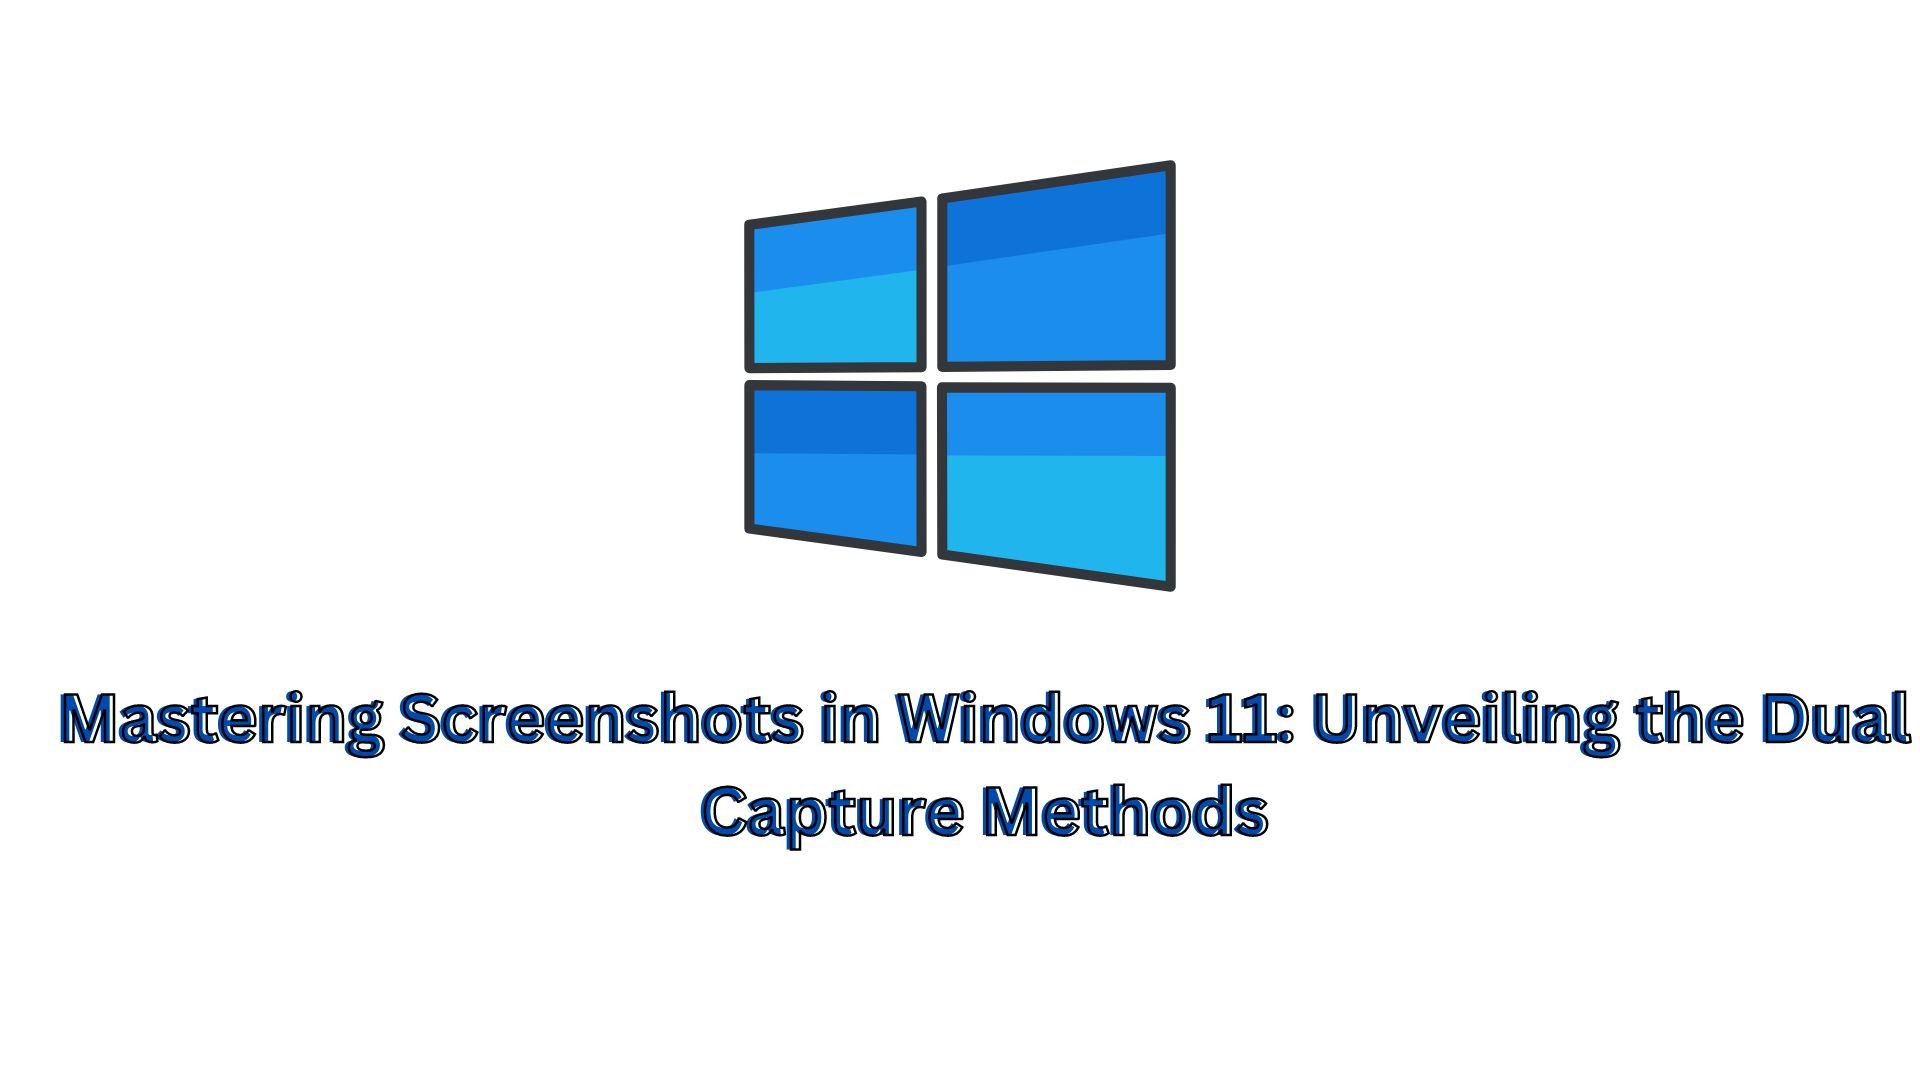 Mastering Screenshots in Windows 11: Unveiling the Dual Capture Methods